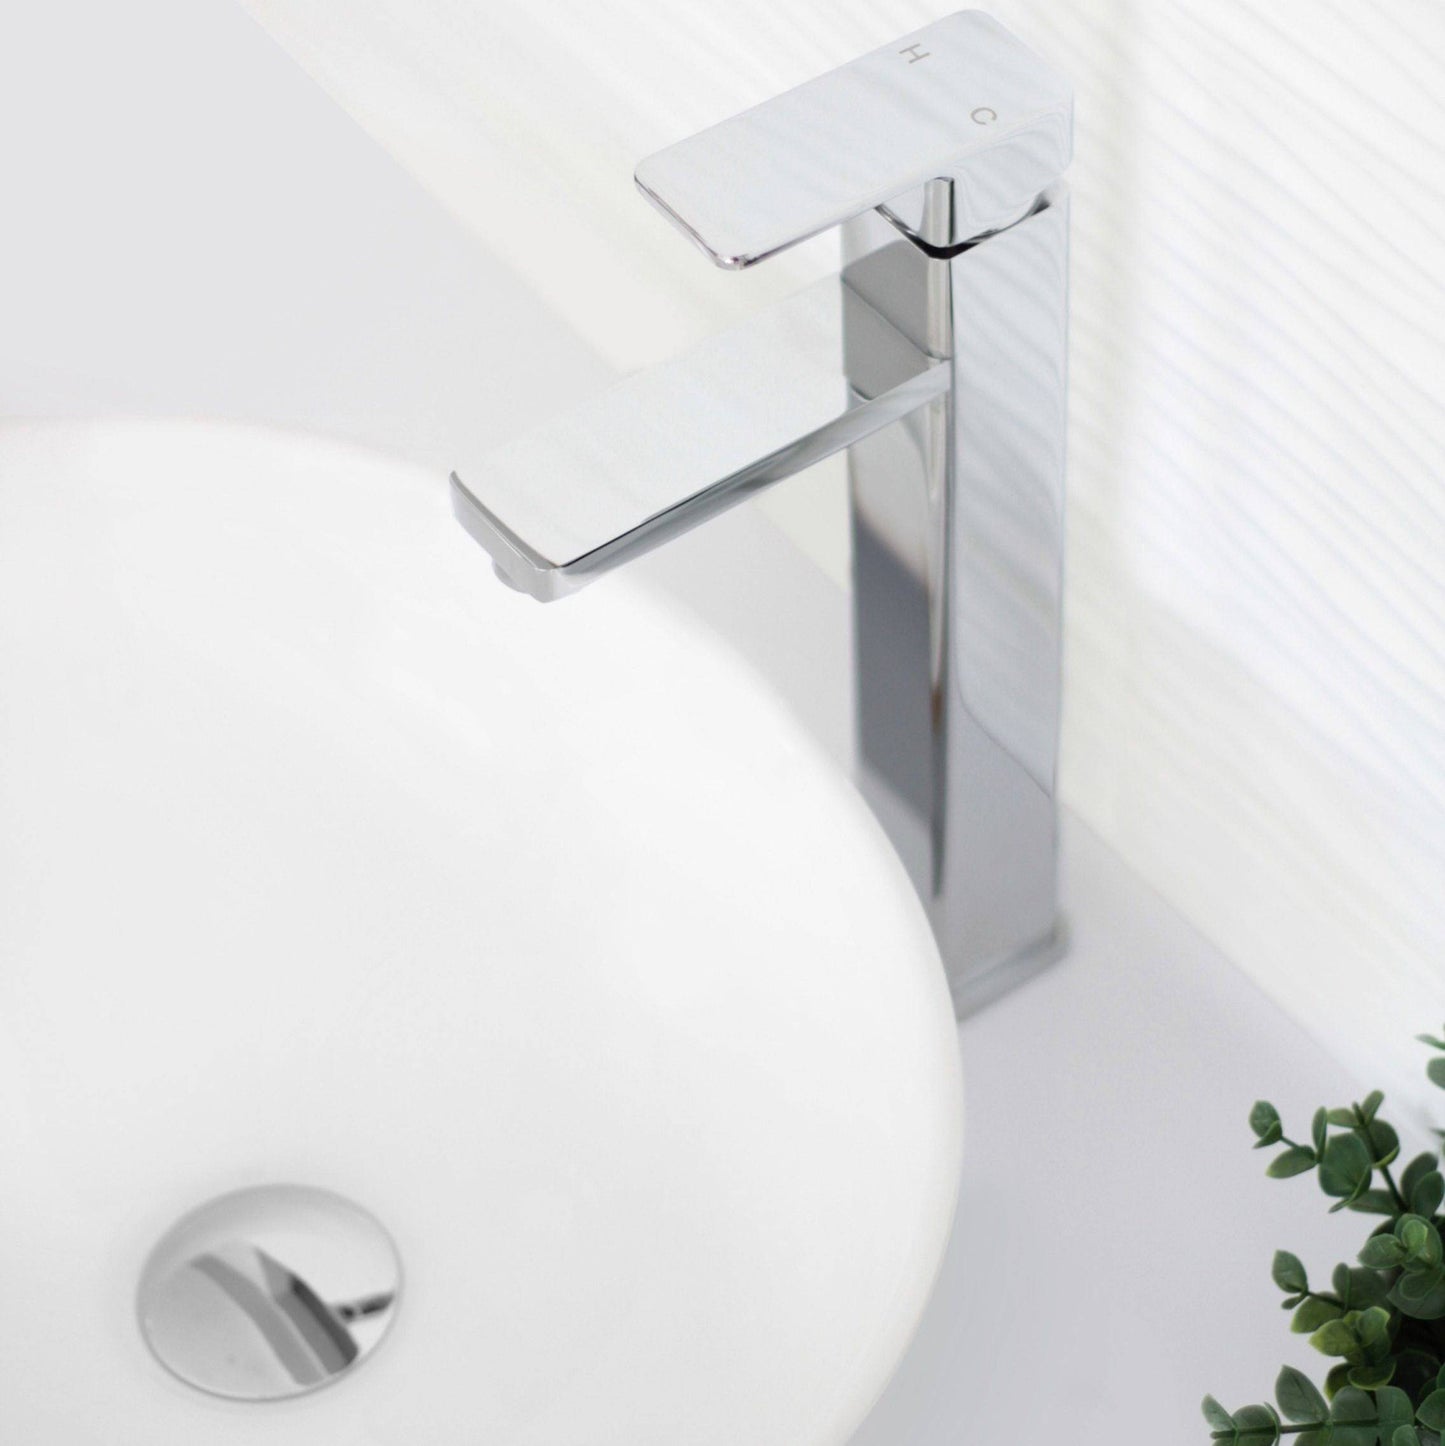 Stylish Daysi 12" Single Handle Bathroom Vessel Faucet Polished Chrome B-121C - Renoz